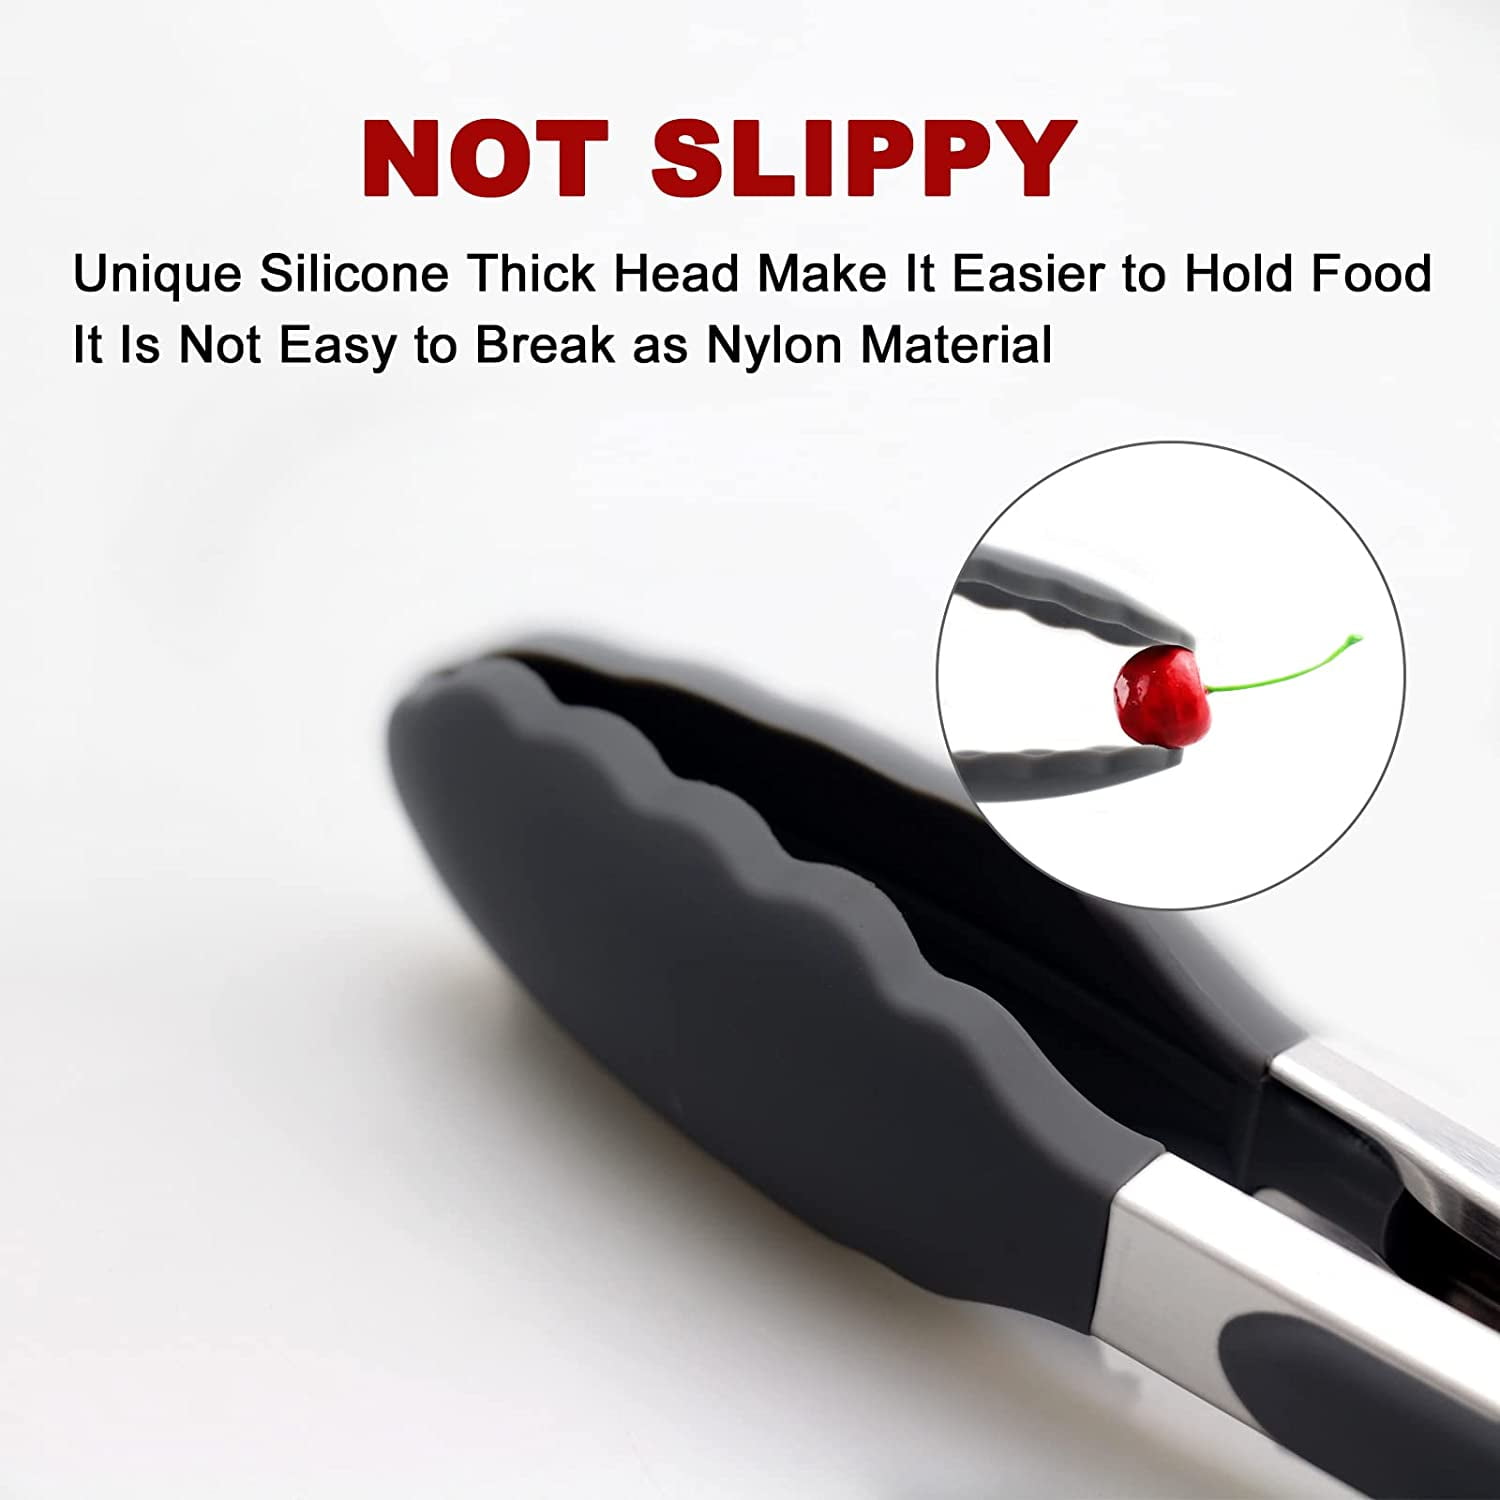 HOTEC Stainless Steel Kitchen Tongs Set of 2 - 9 and 12 Locking Metal Food Tongs Non-Slip Grip